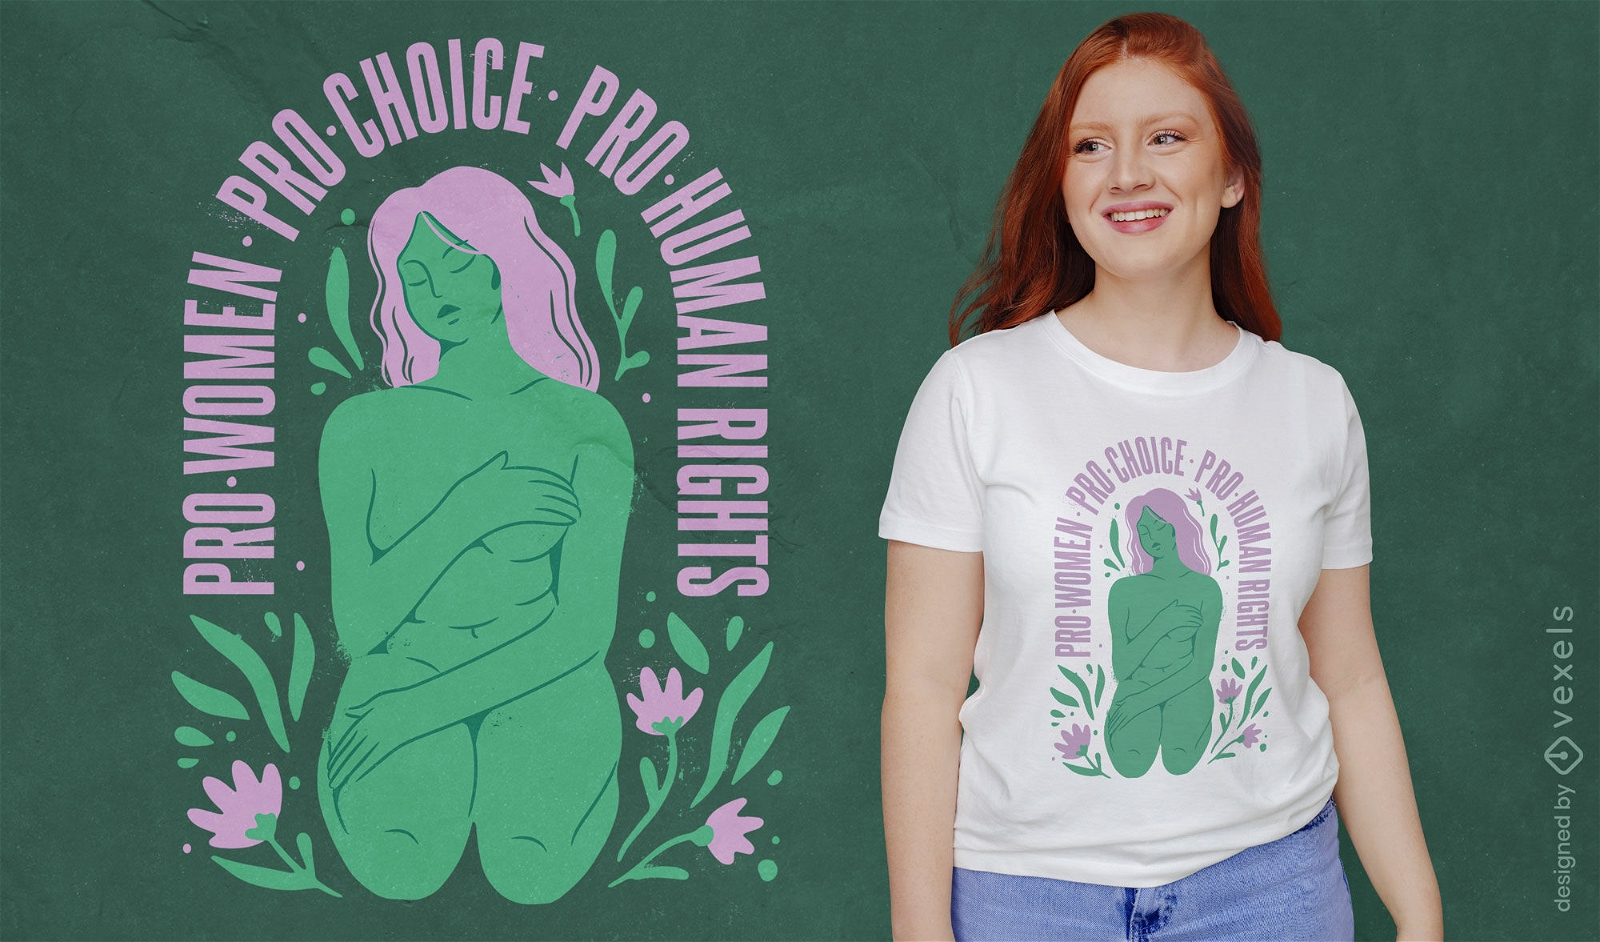 Pro Choice feministisches T-Shirt-Design